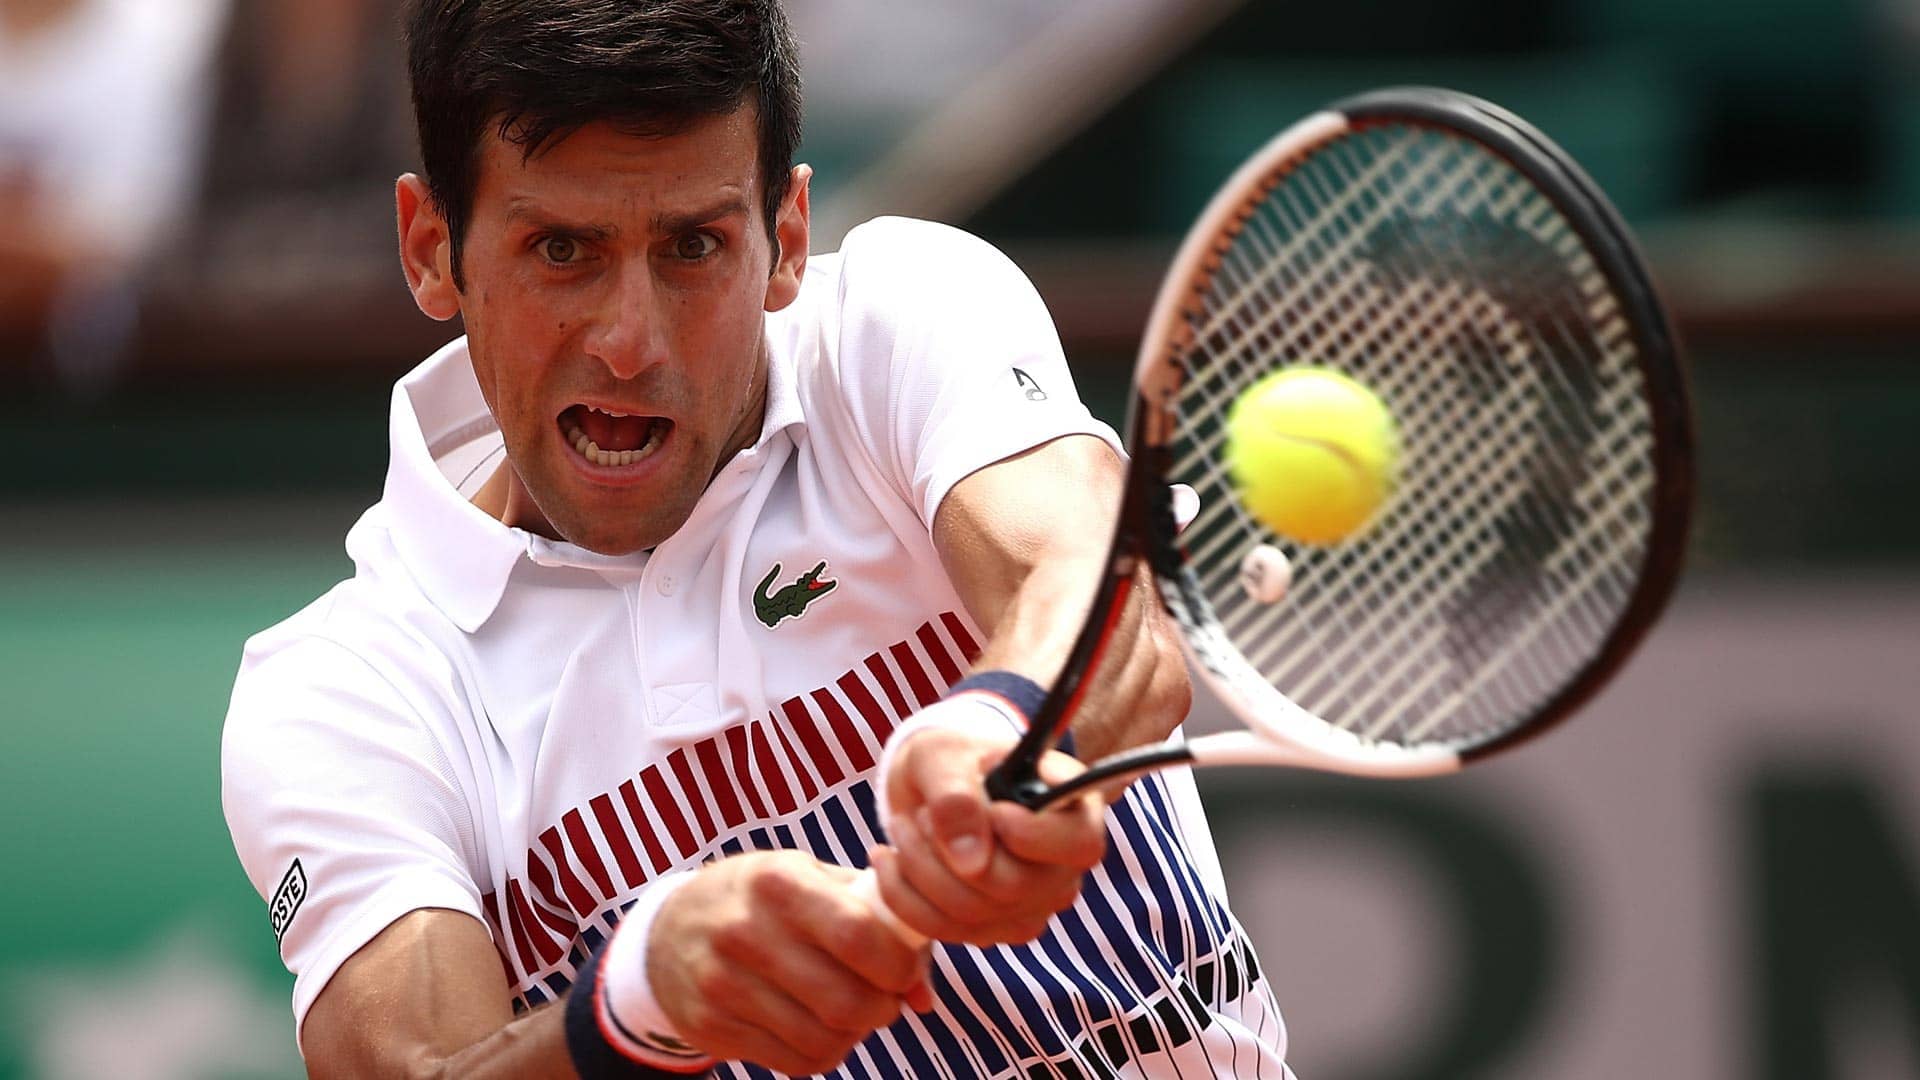 Djokovic Inicia Firme Su Defensa En París  ATP Tour  Tenis